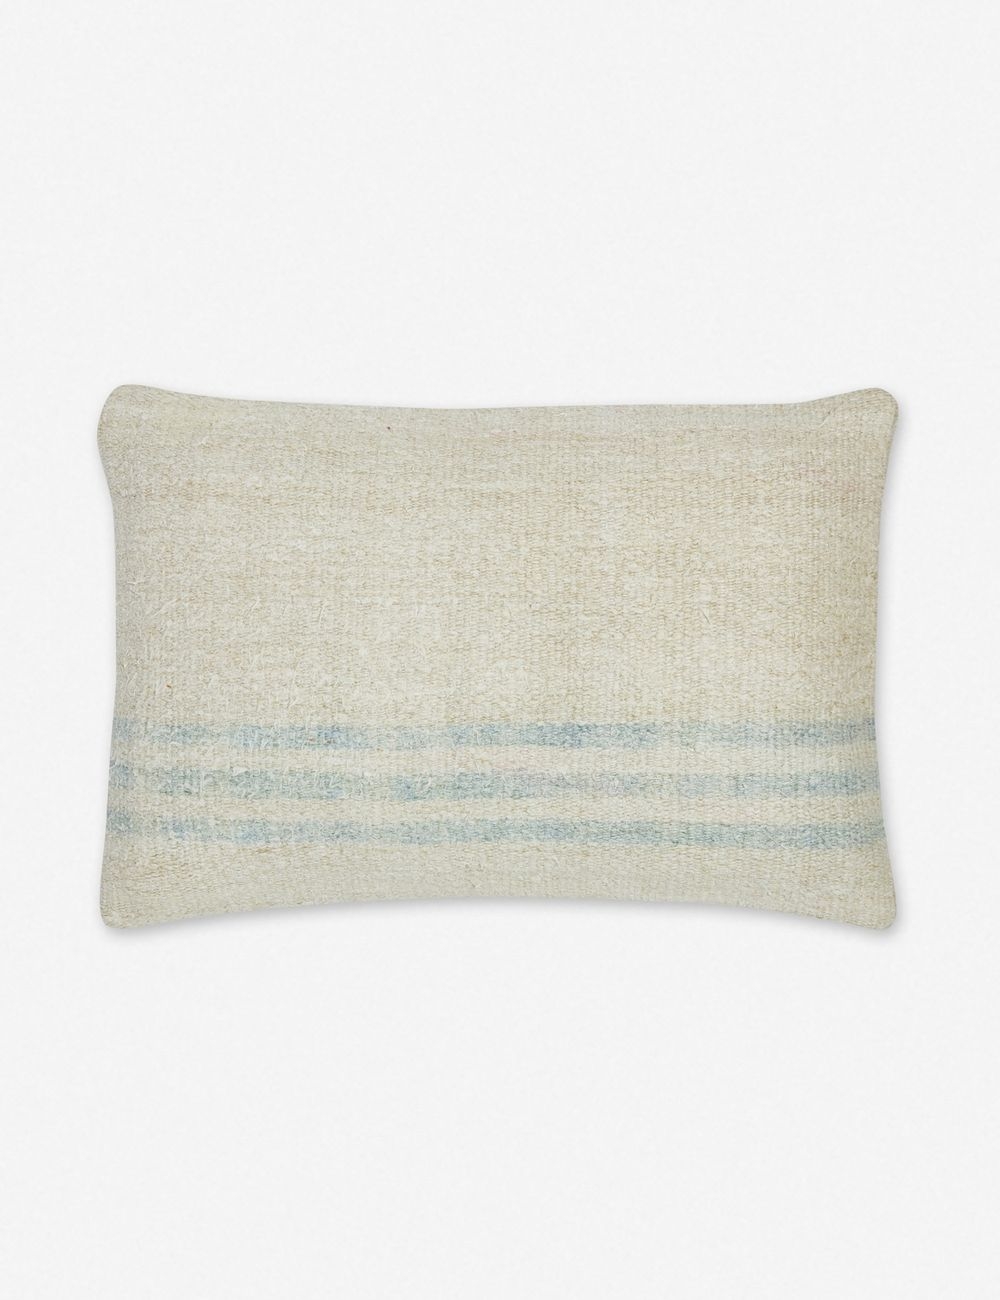 Arbora Vintage Lumbar Pillow - Image 0